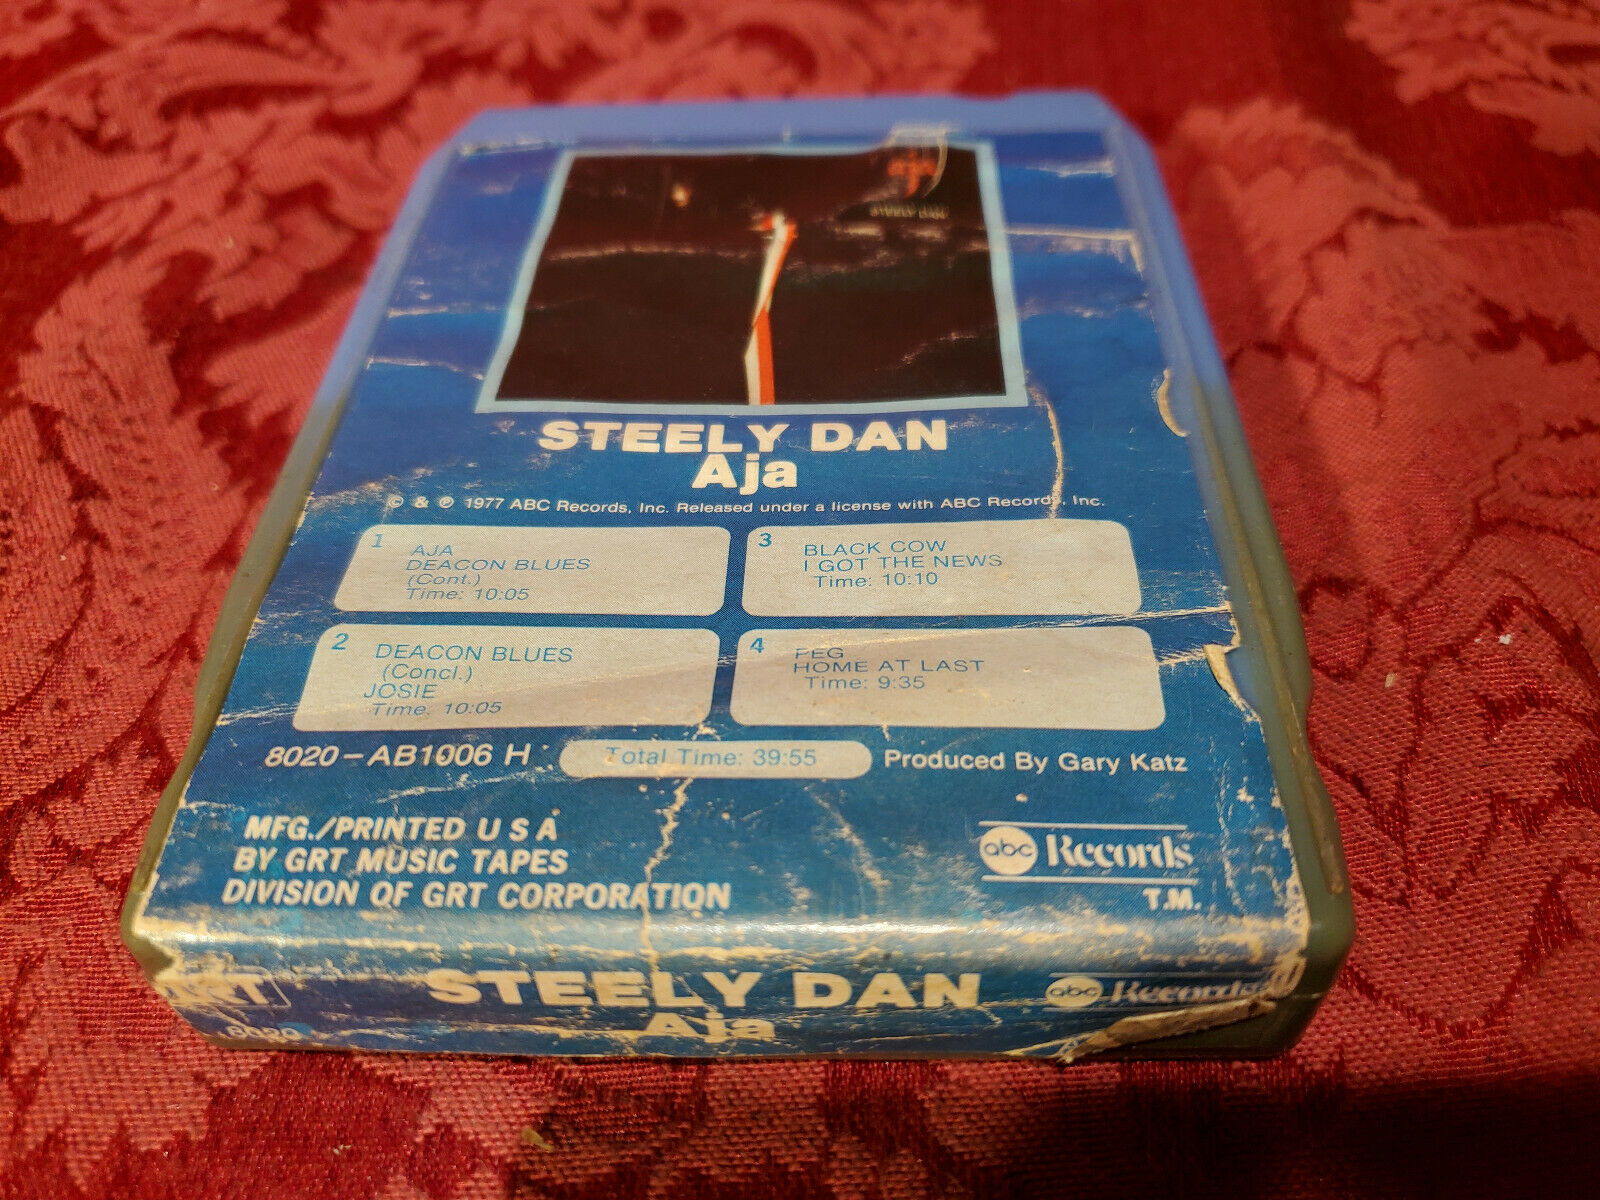 Steely Dan, Aja – The 8-Track Tape Store